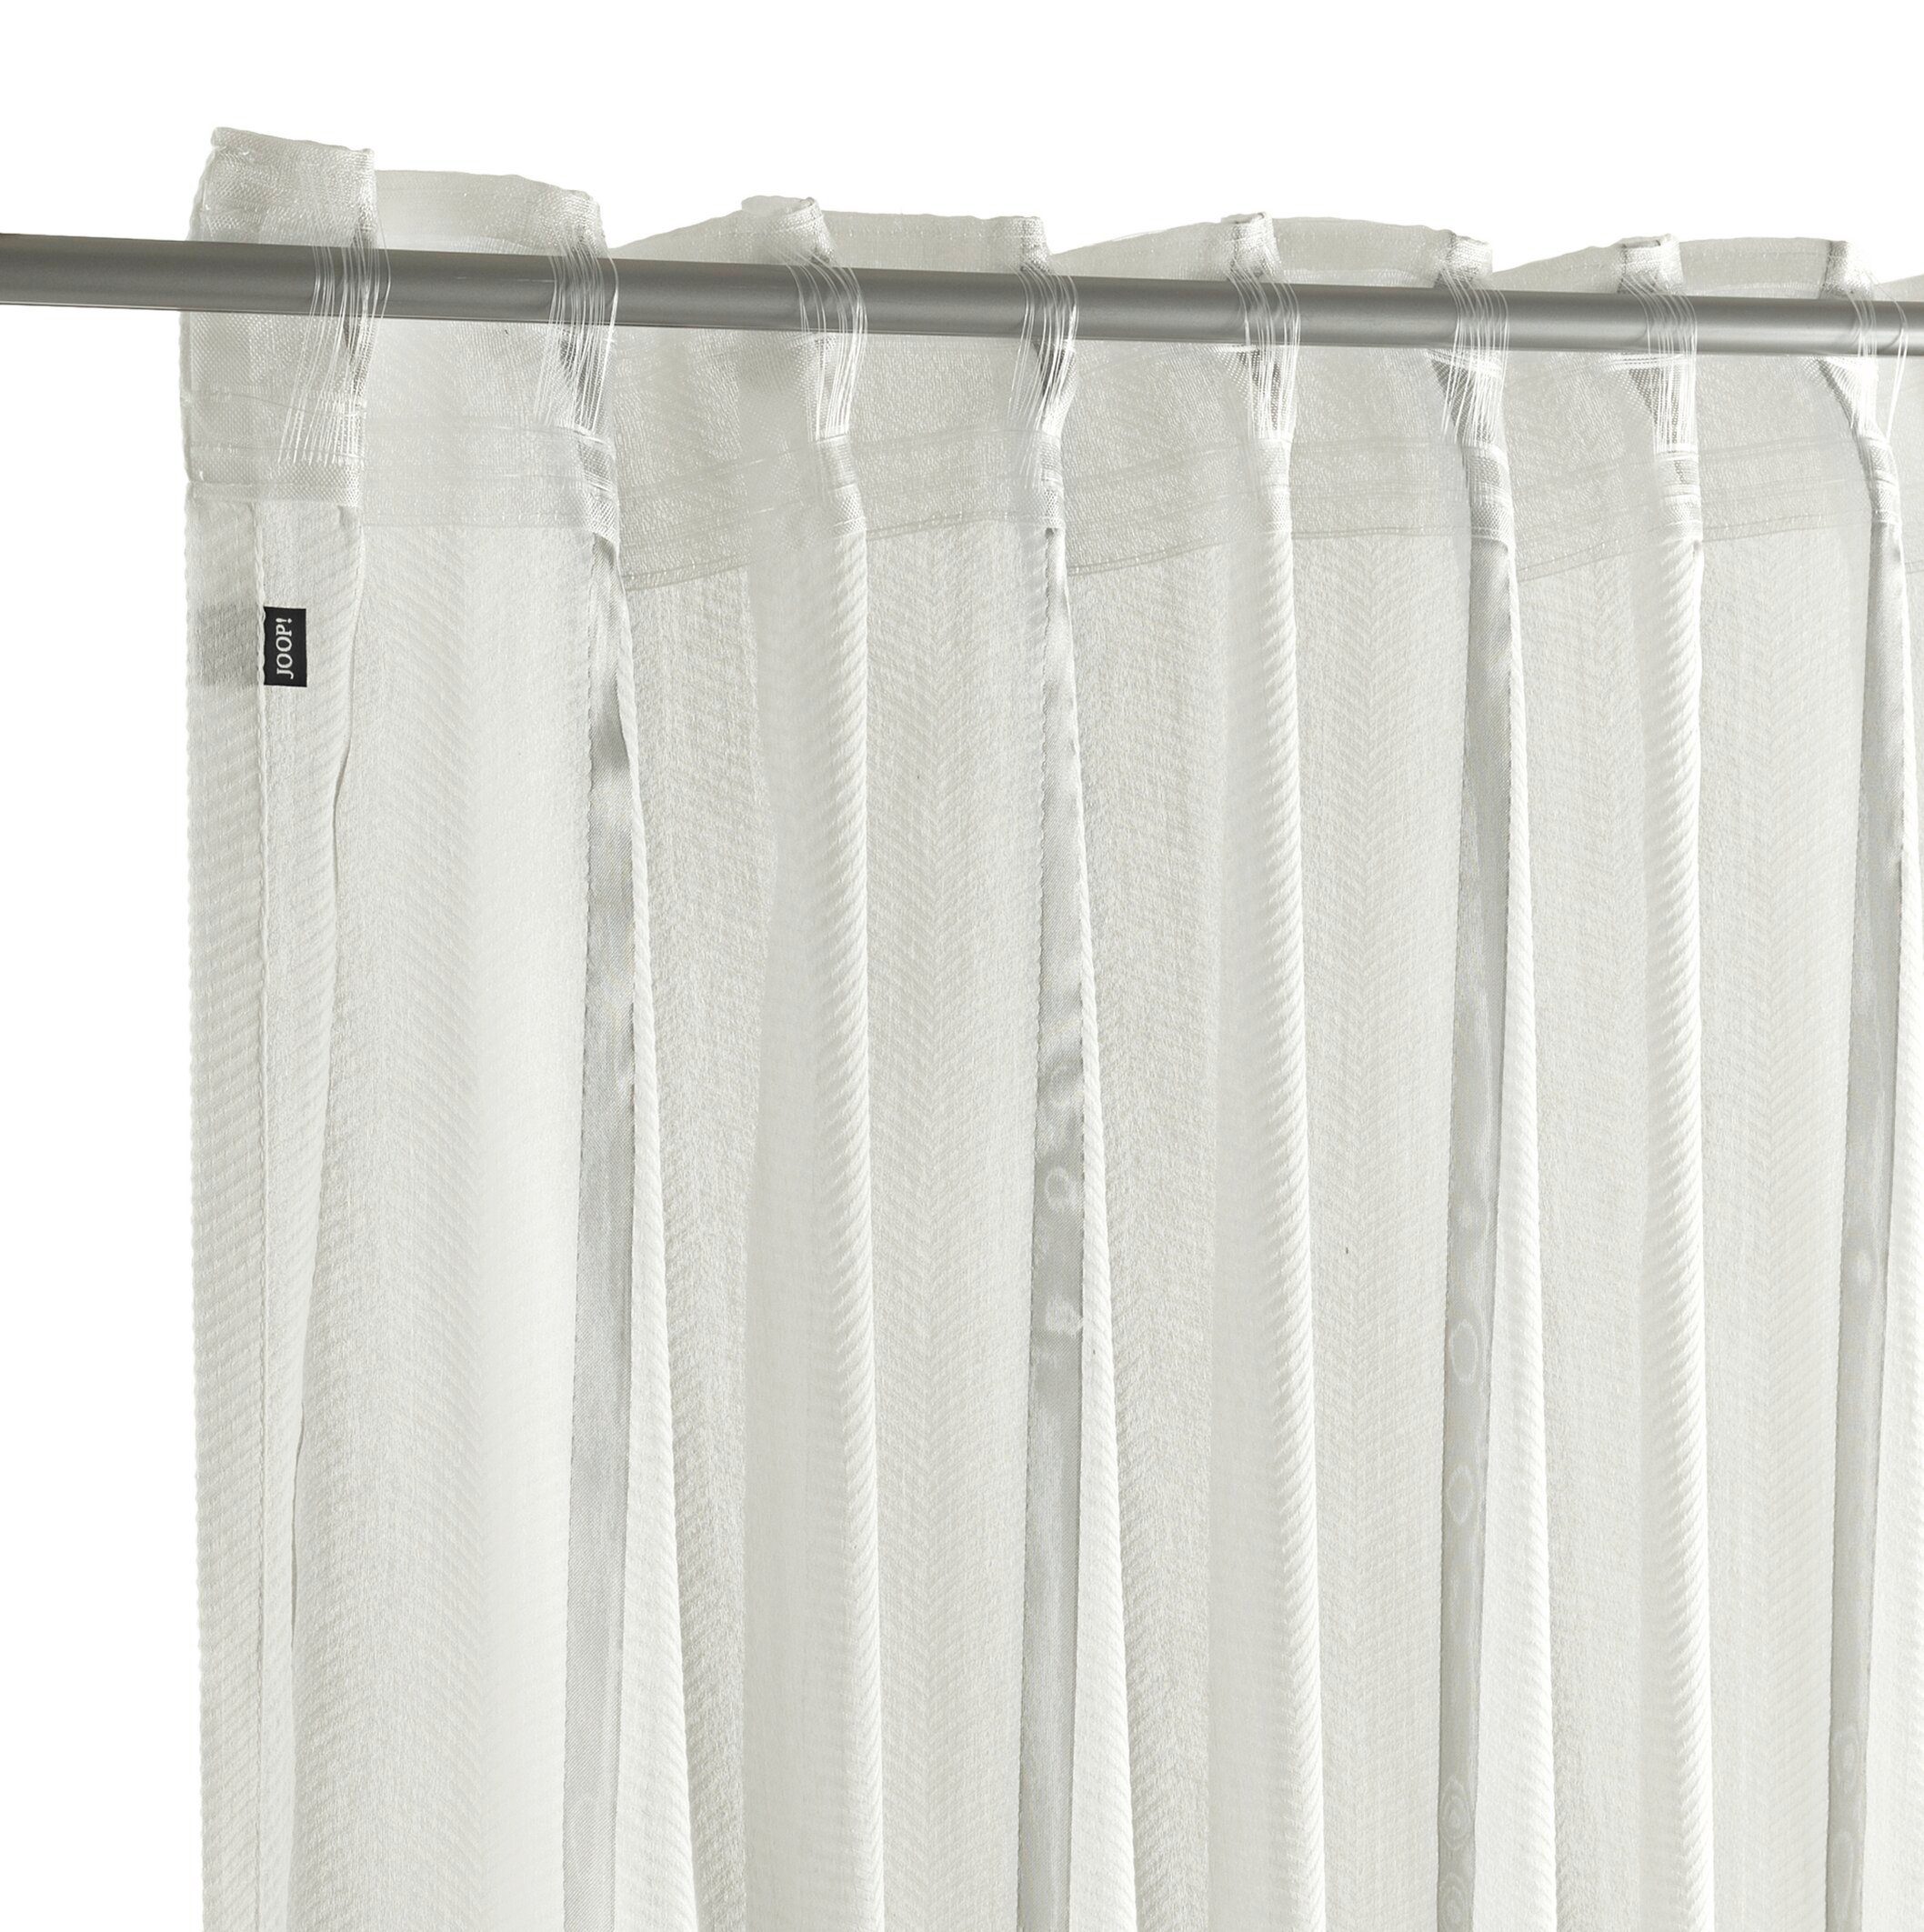 BOND Joop!, - JOOP! St), Textil Weiß-Natur transparent, Fertiggardine, LIVING (1 Gardine